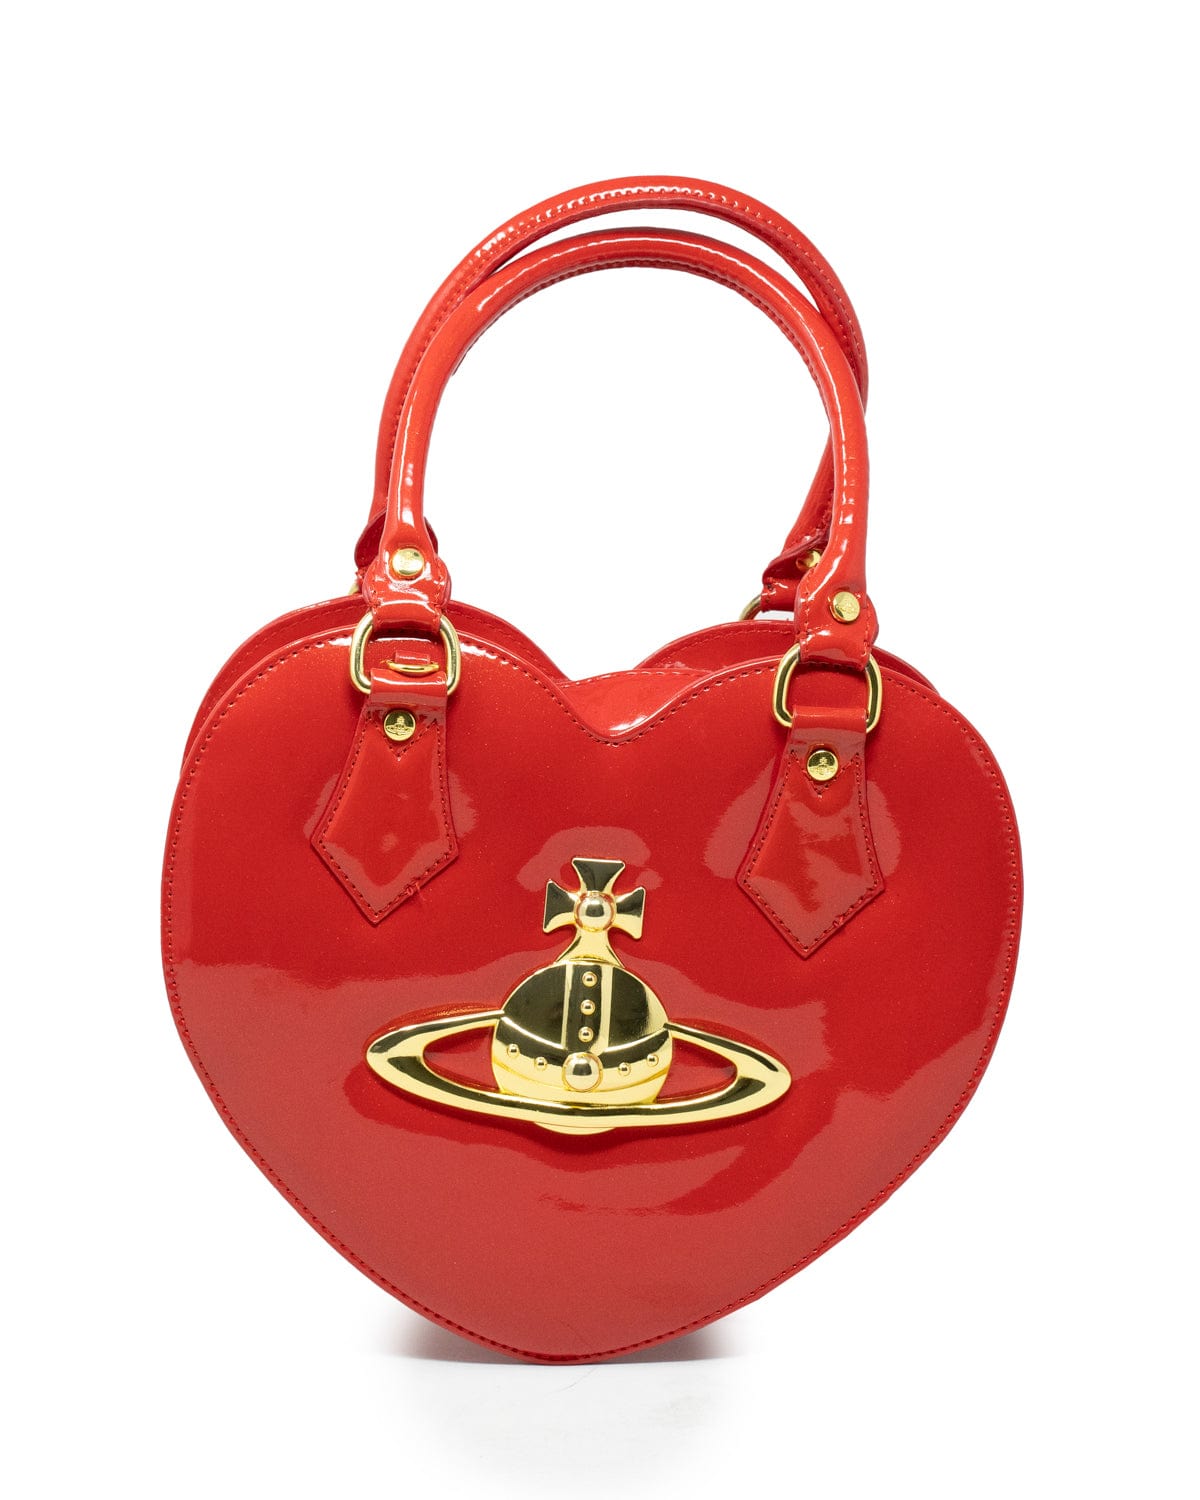 Auth Vivienne Westwood Anglomania Handbag Bag Red Heart Shaped